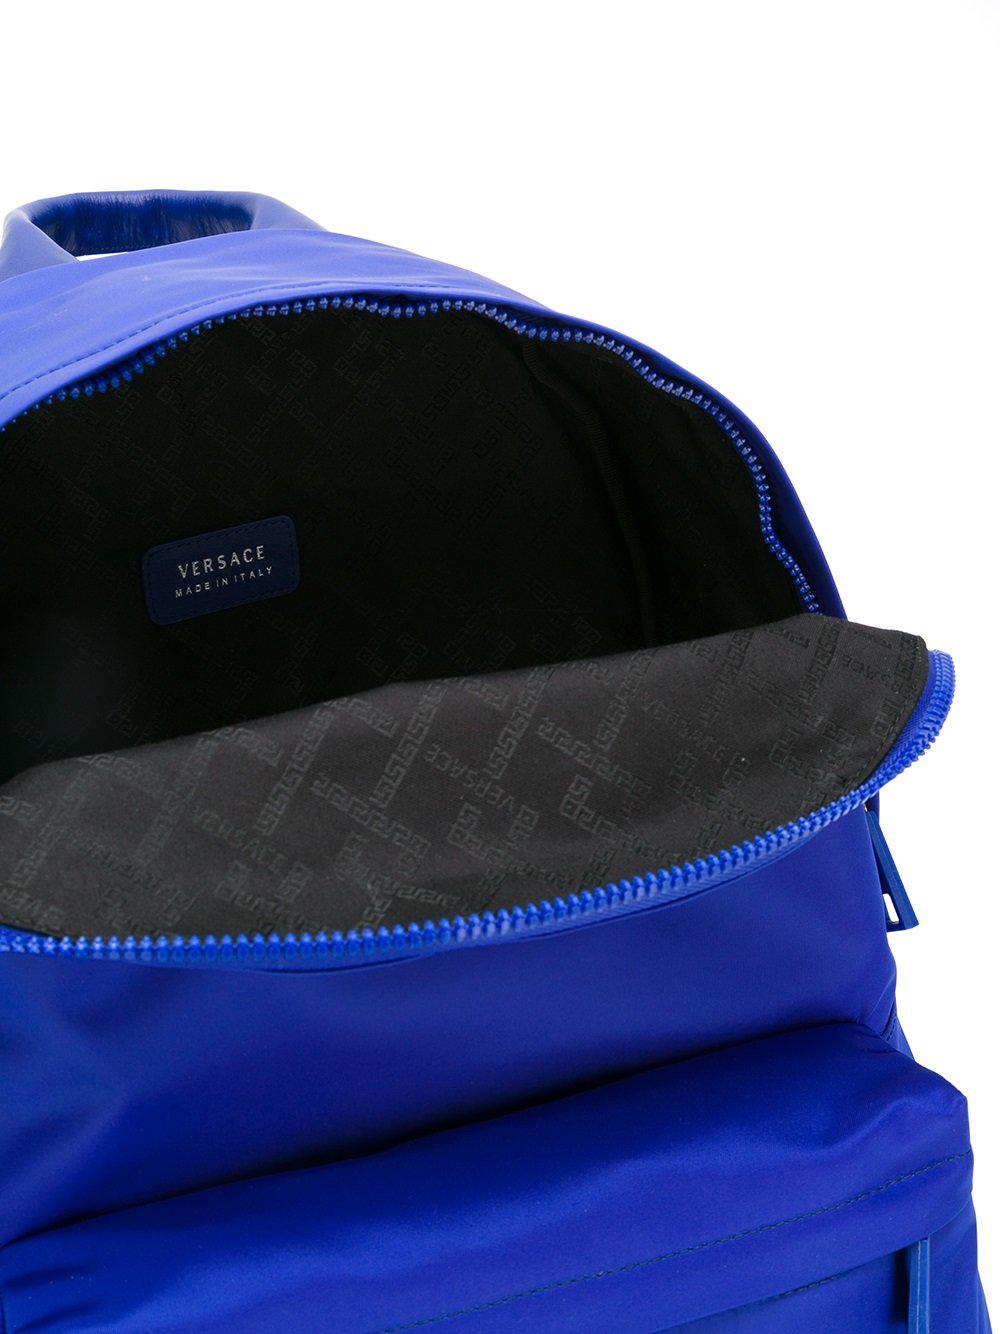 Versace Pop Medusa Backpack in Blue for Men